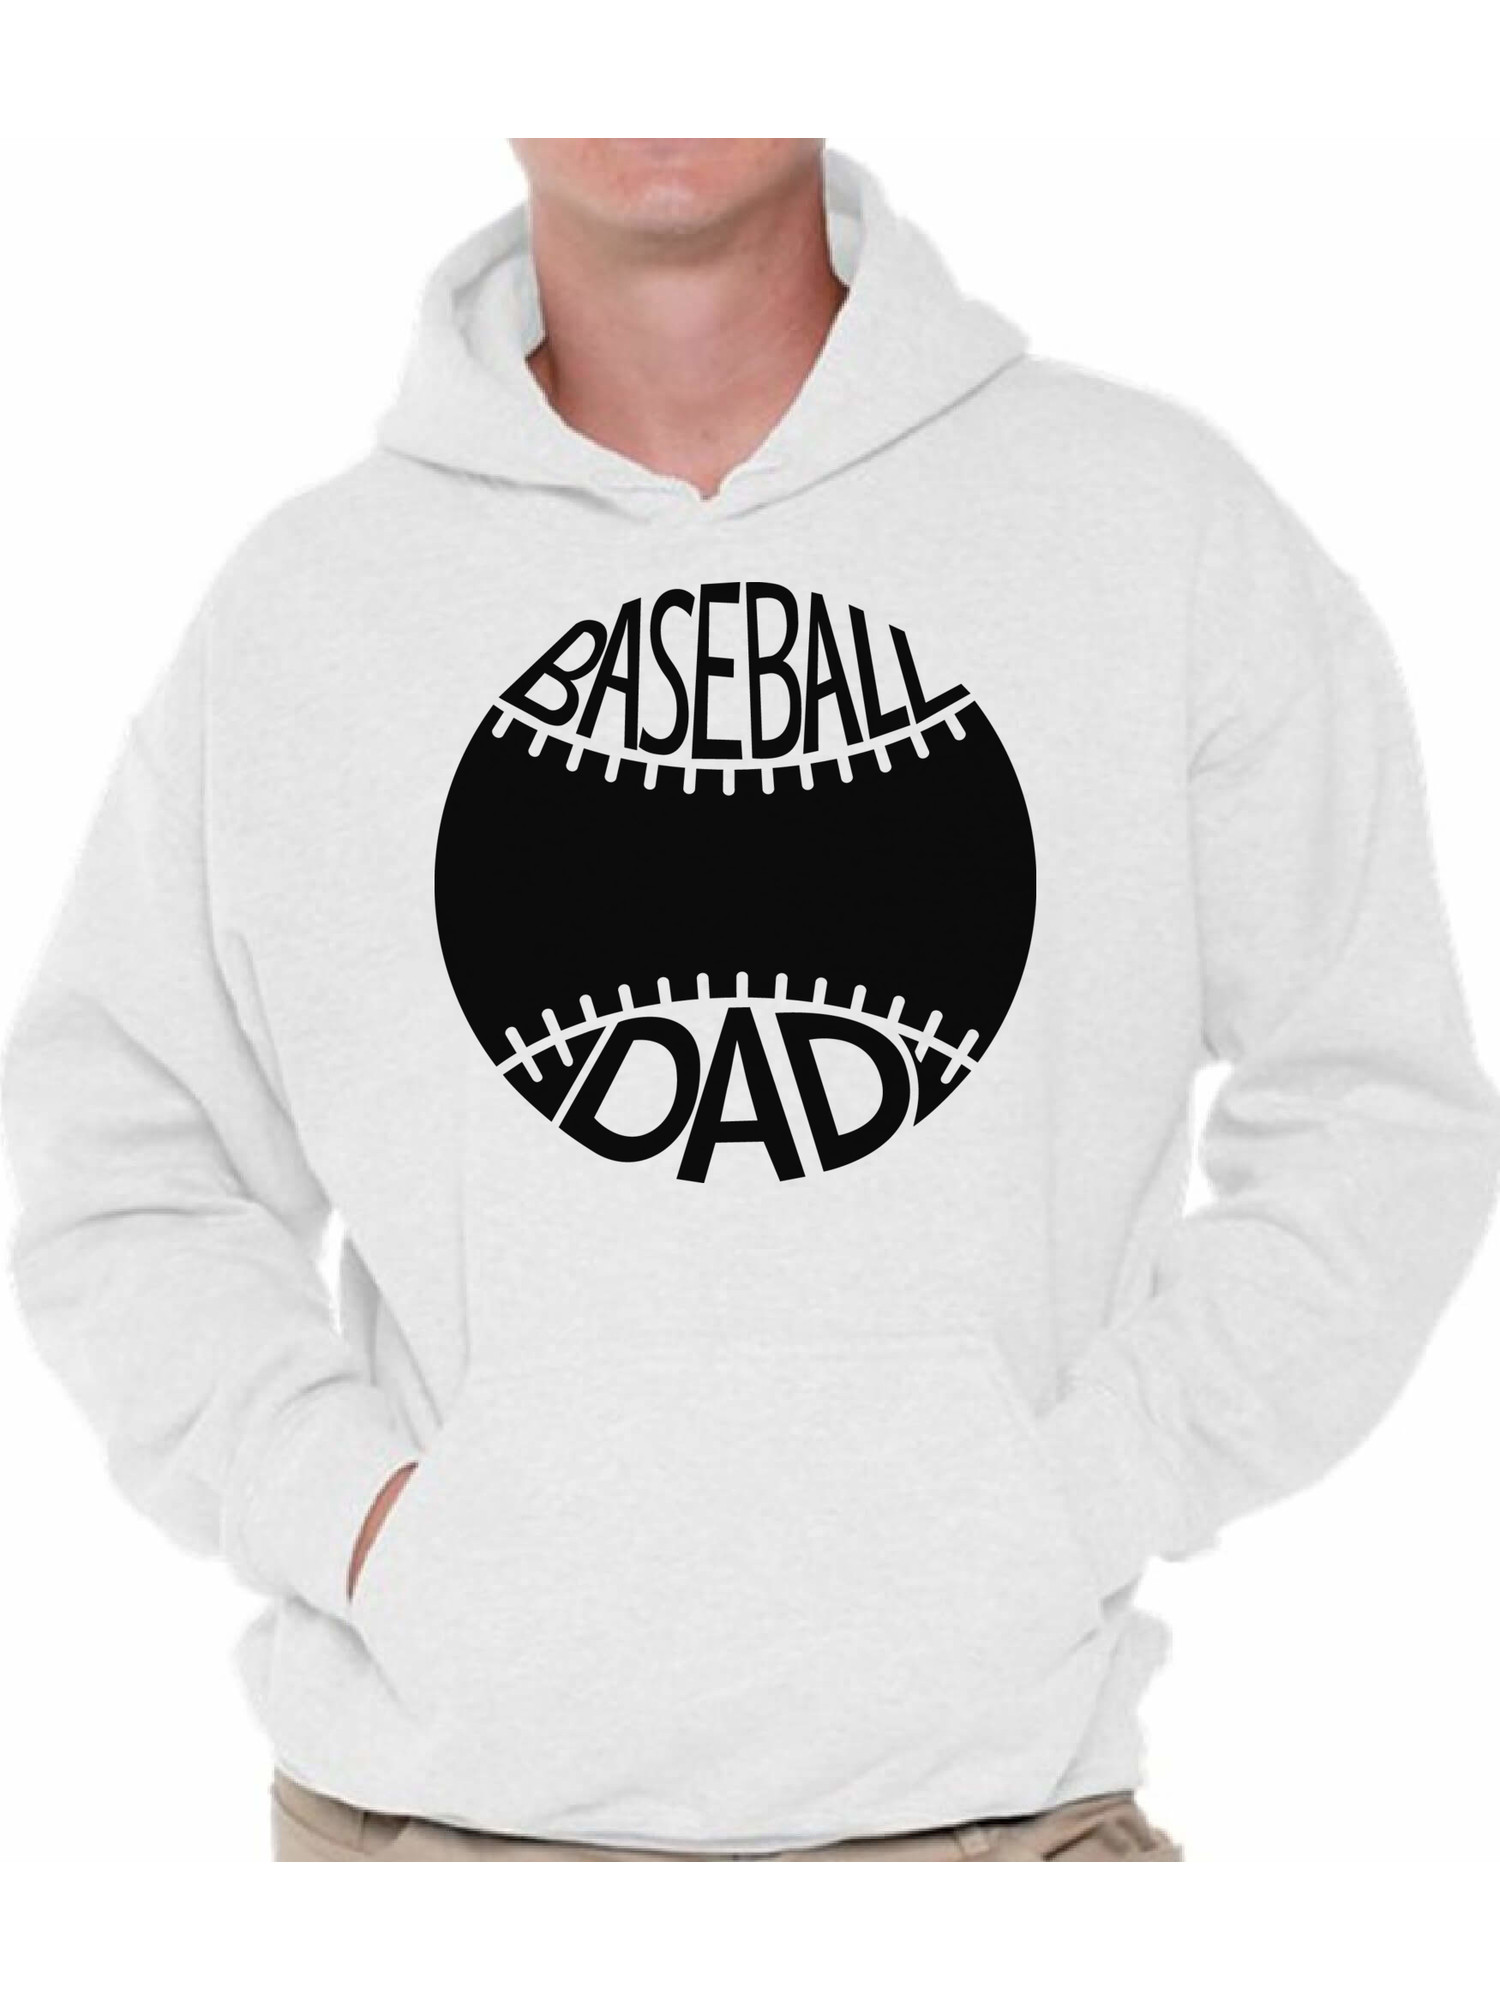 Cool Sporty Hairstyles
 Awkward Styles Awkward Styles Men s Baseball Dad Cool